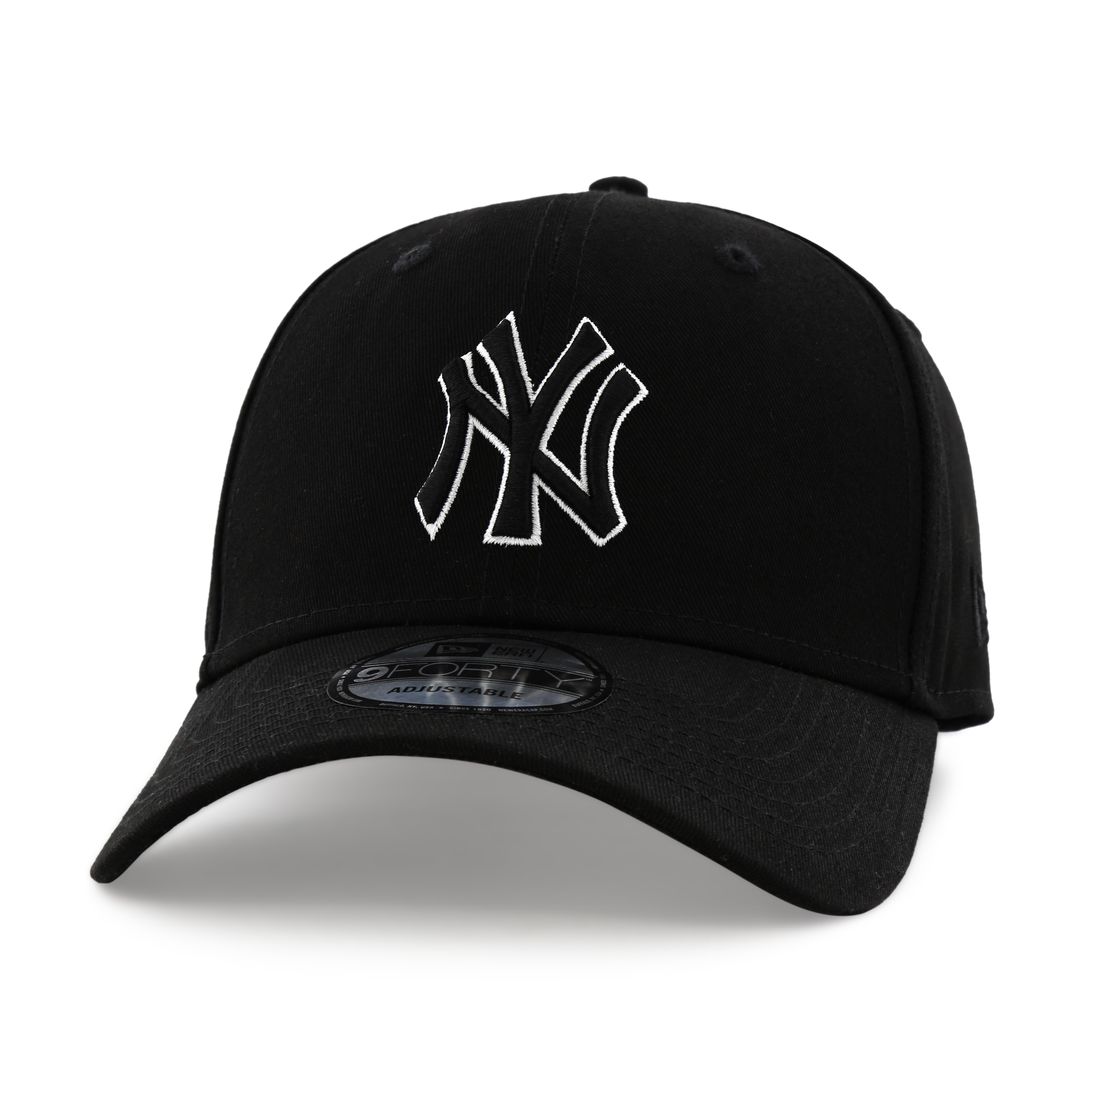 New Era Black Base New York Yankees Men's Cap Black